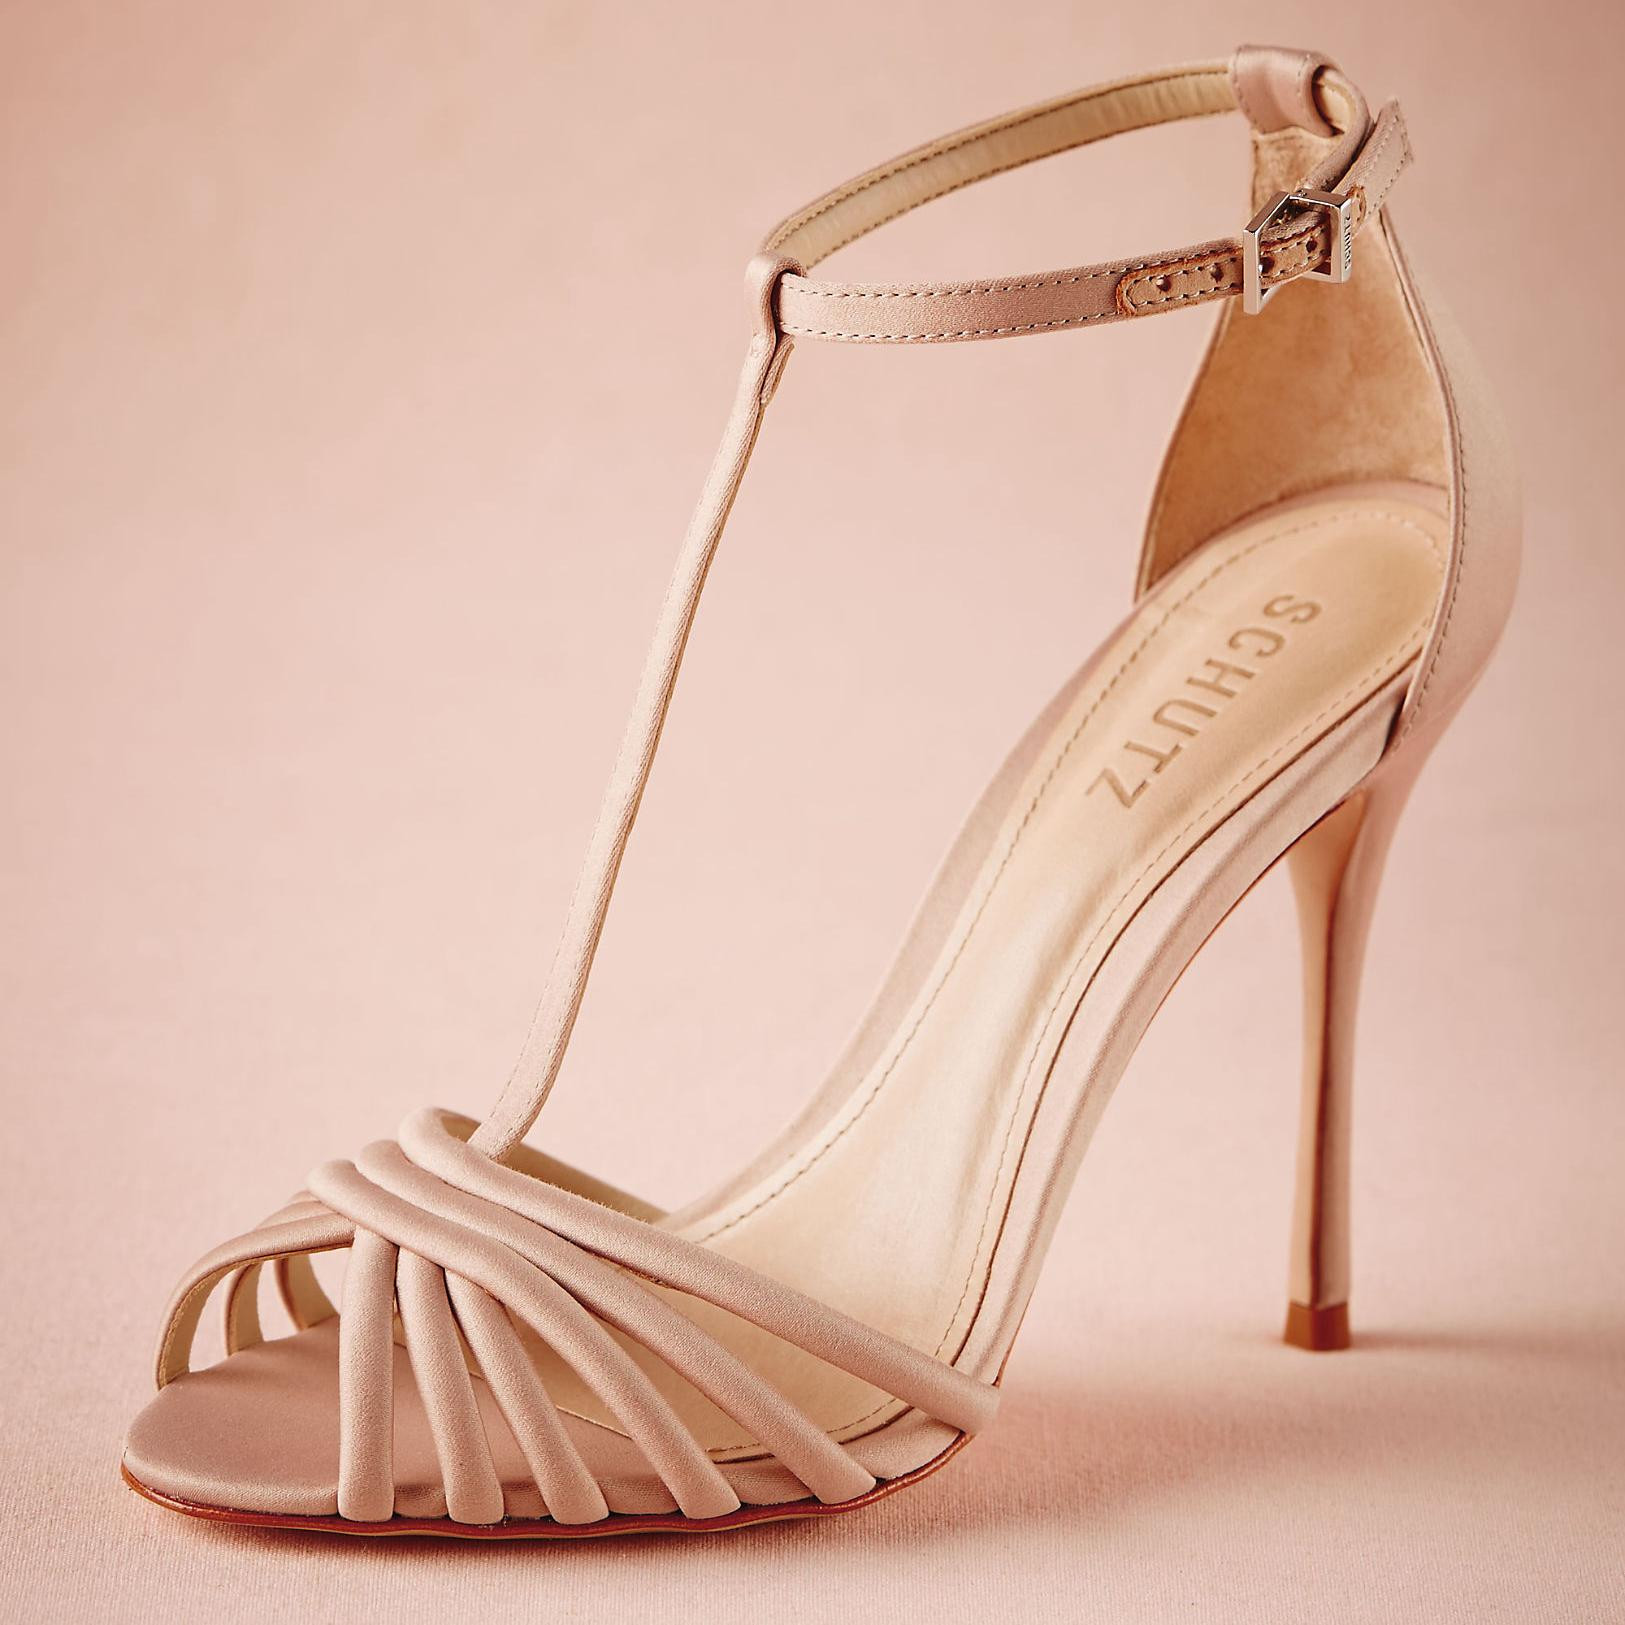 Blush Colored Wedding Shoes
 Blush Pink Satin Wedding Shoes Open Toe Bridal Sandal For